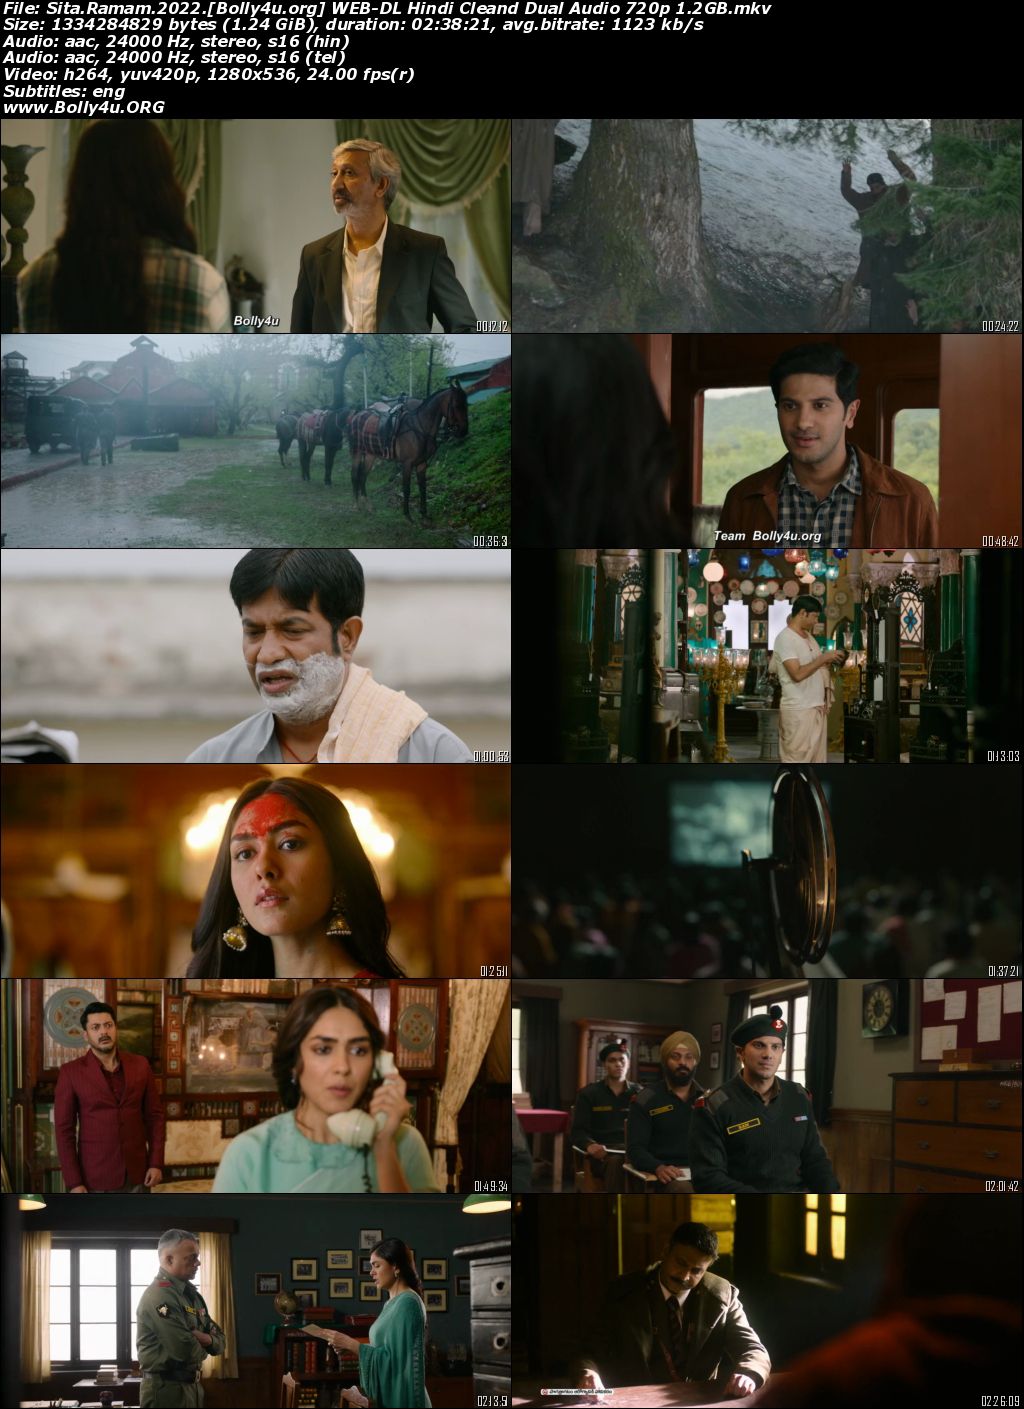 Sita Ramam 2022 WEB-DL Hindi Cleaned Dual Audio Full Movie Download 1080p 720p 480p